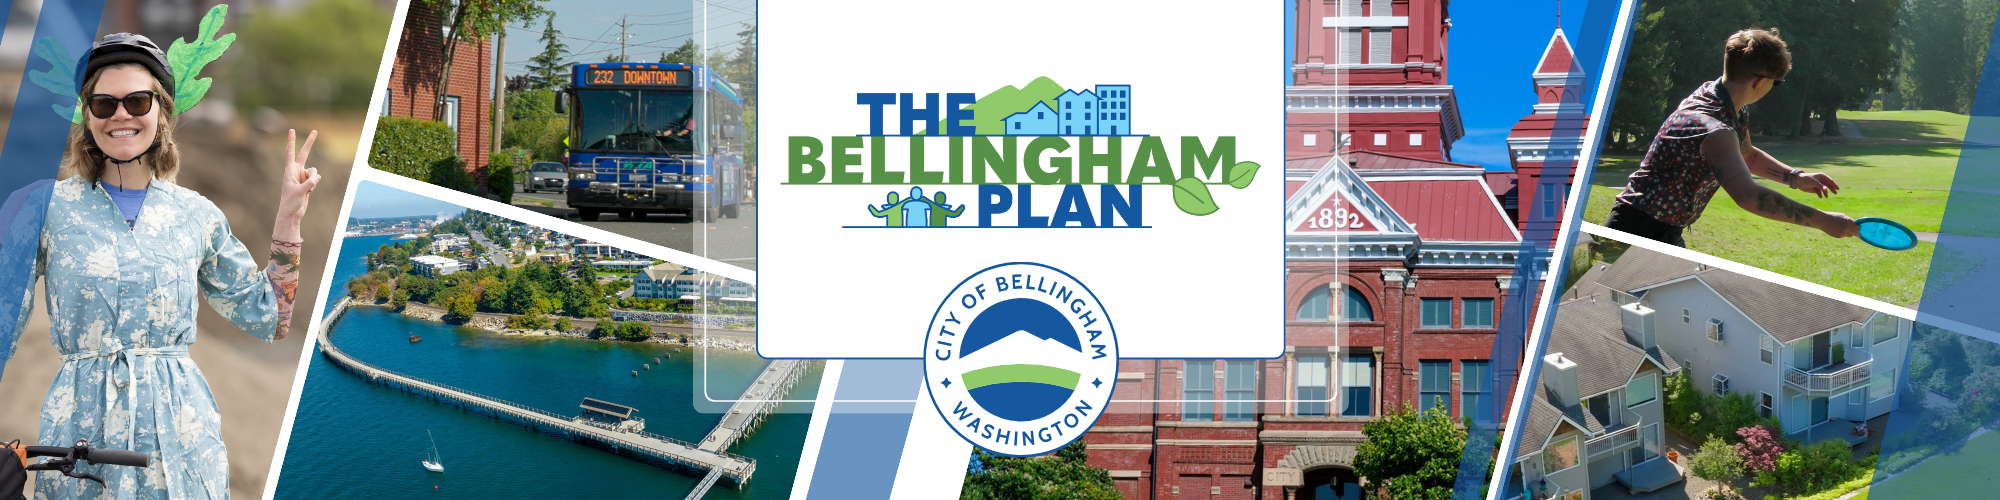 The Bellingham Plan